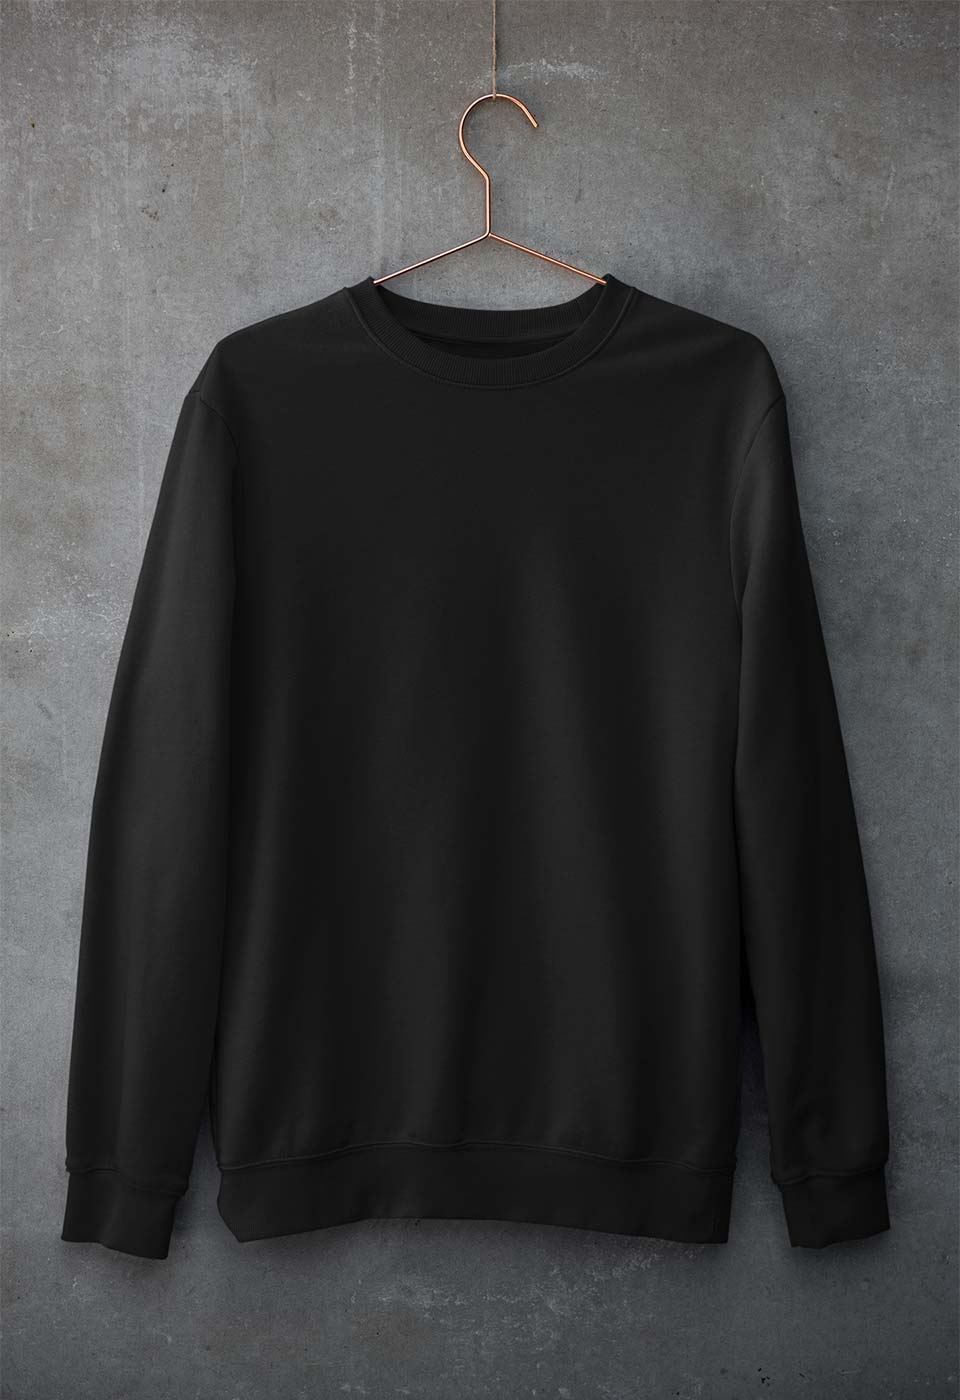 Sweatshirts : Unisex Plain & Solid Crew Neck (Multiple Colors and Sizes)